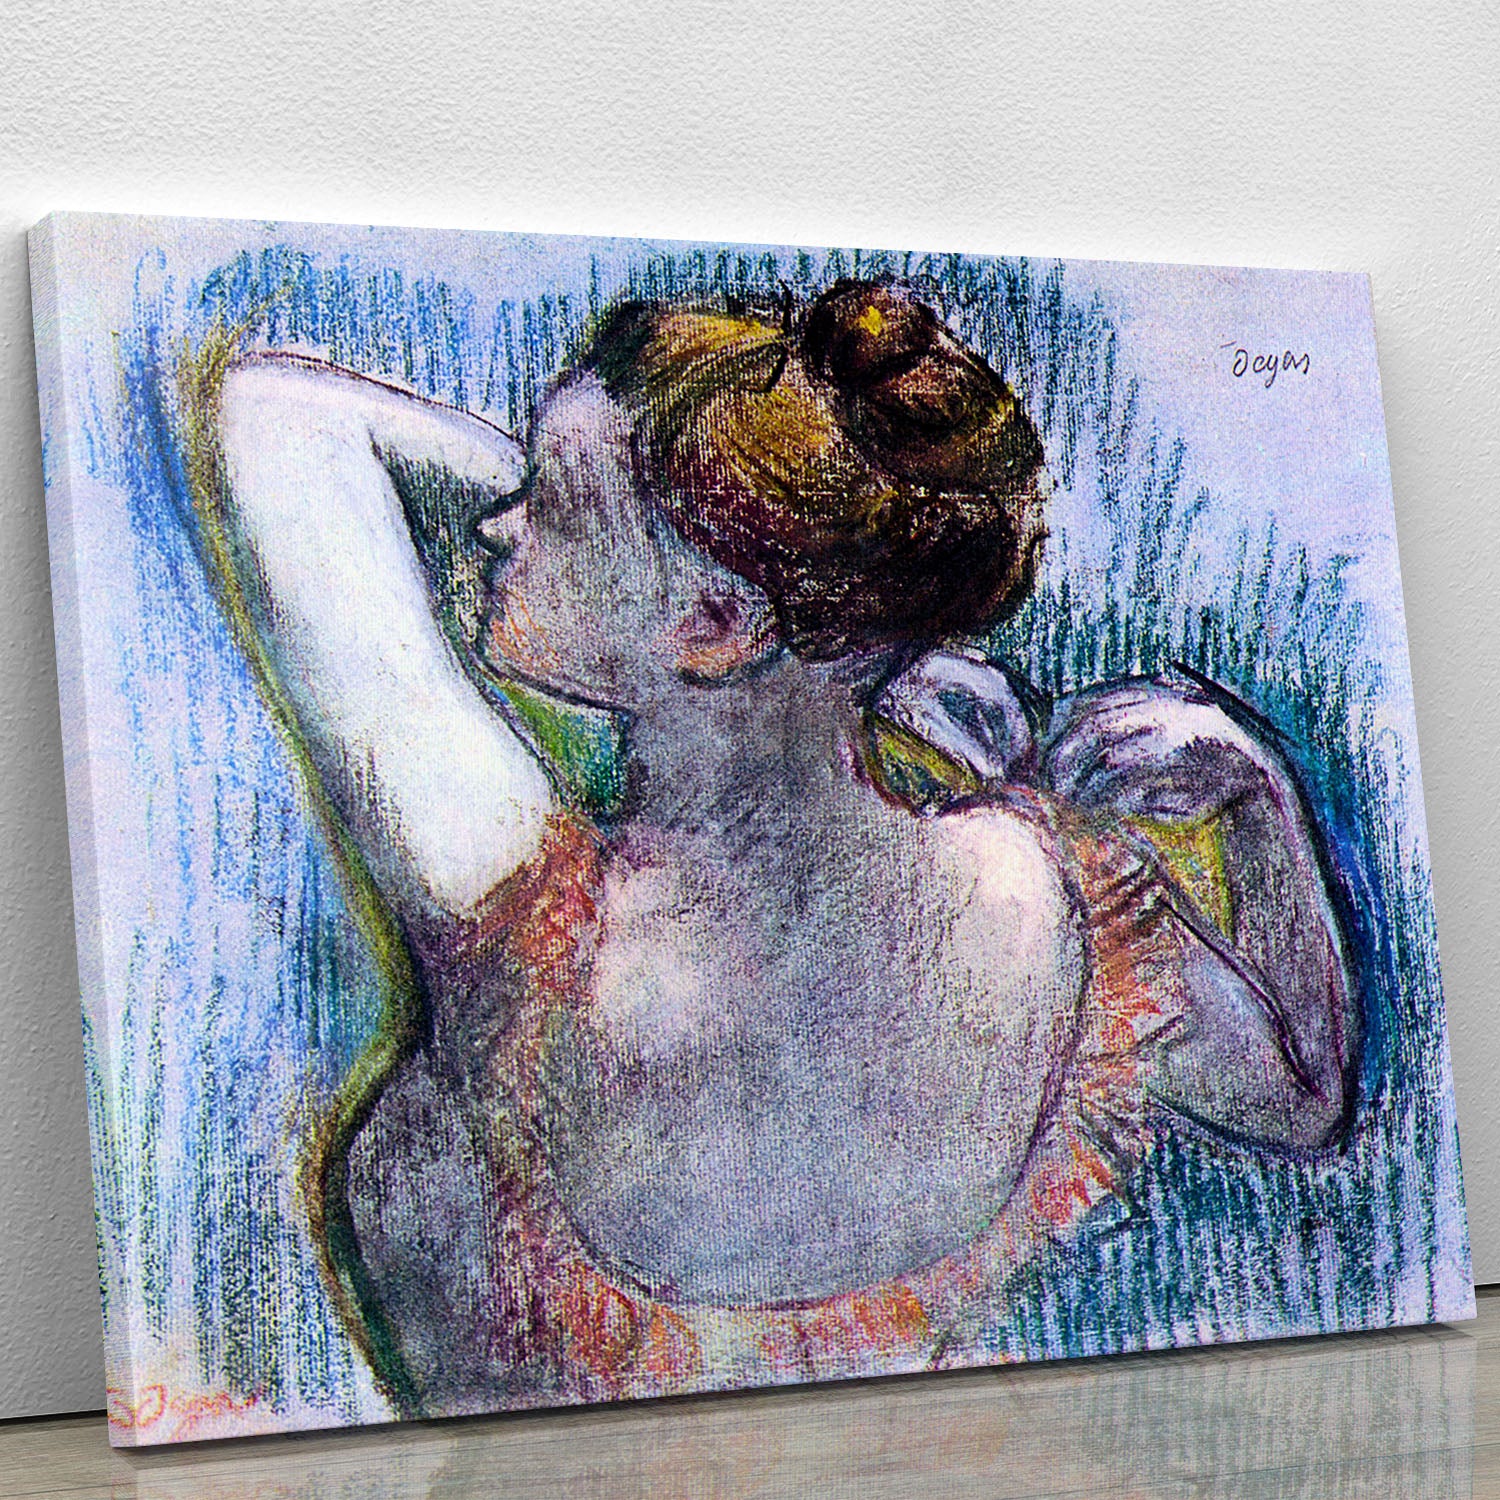 Dancer 1 by Degas Canvas Print or Poster - Canvas Art Rocks - 1